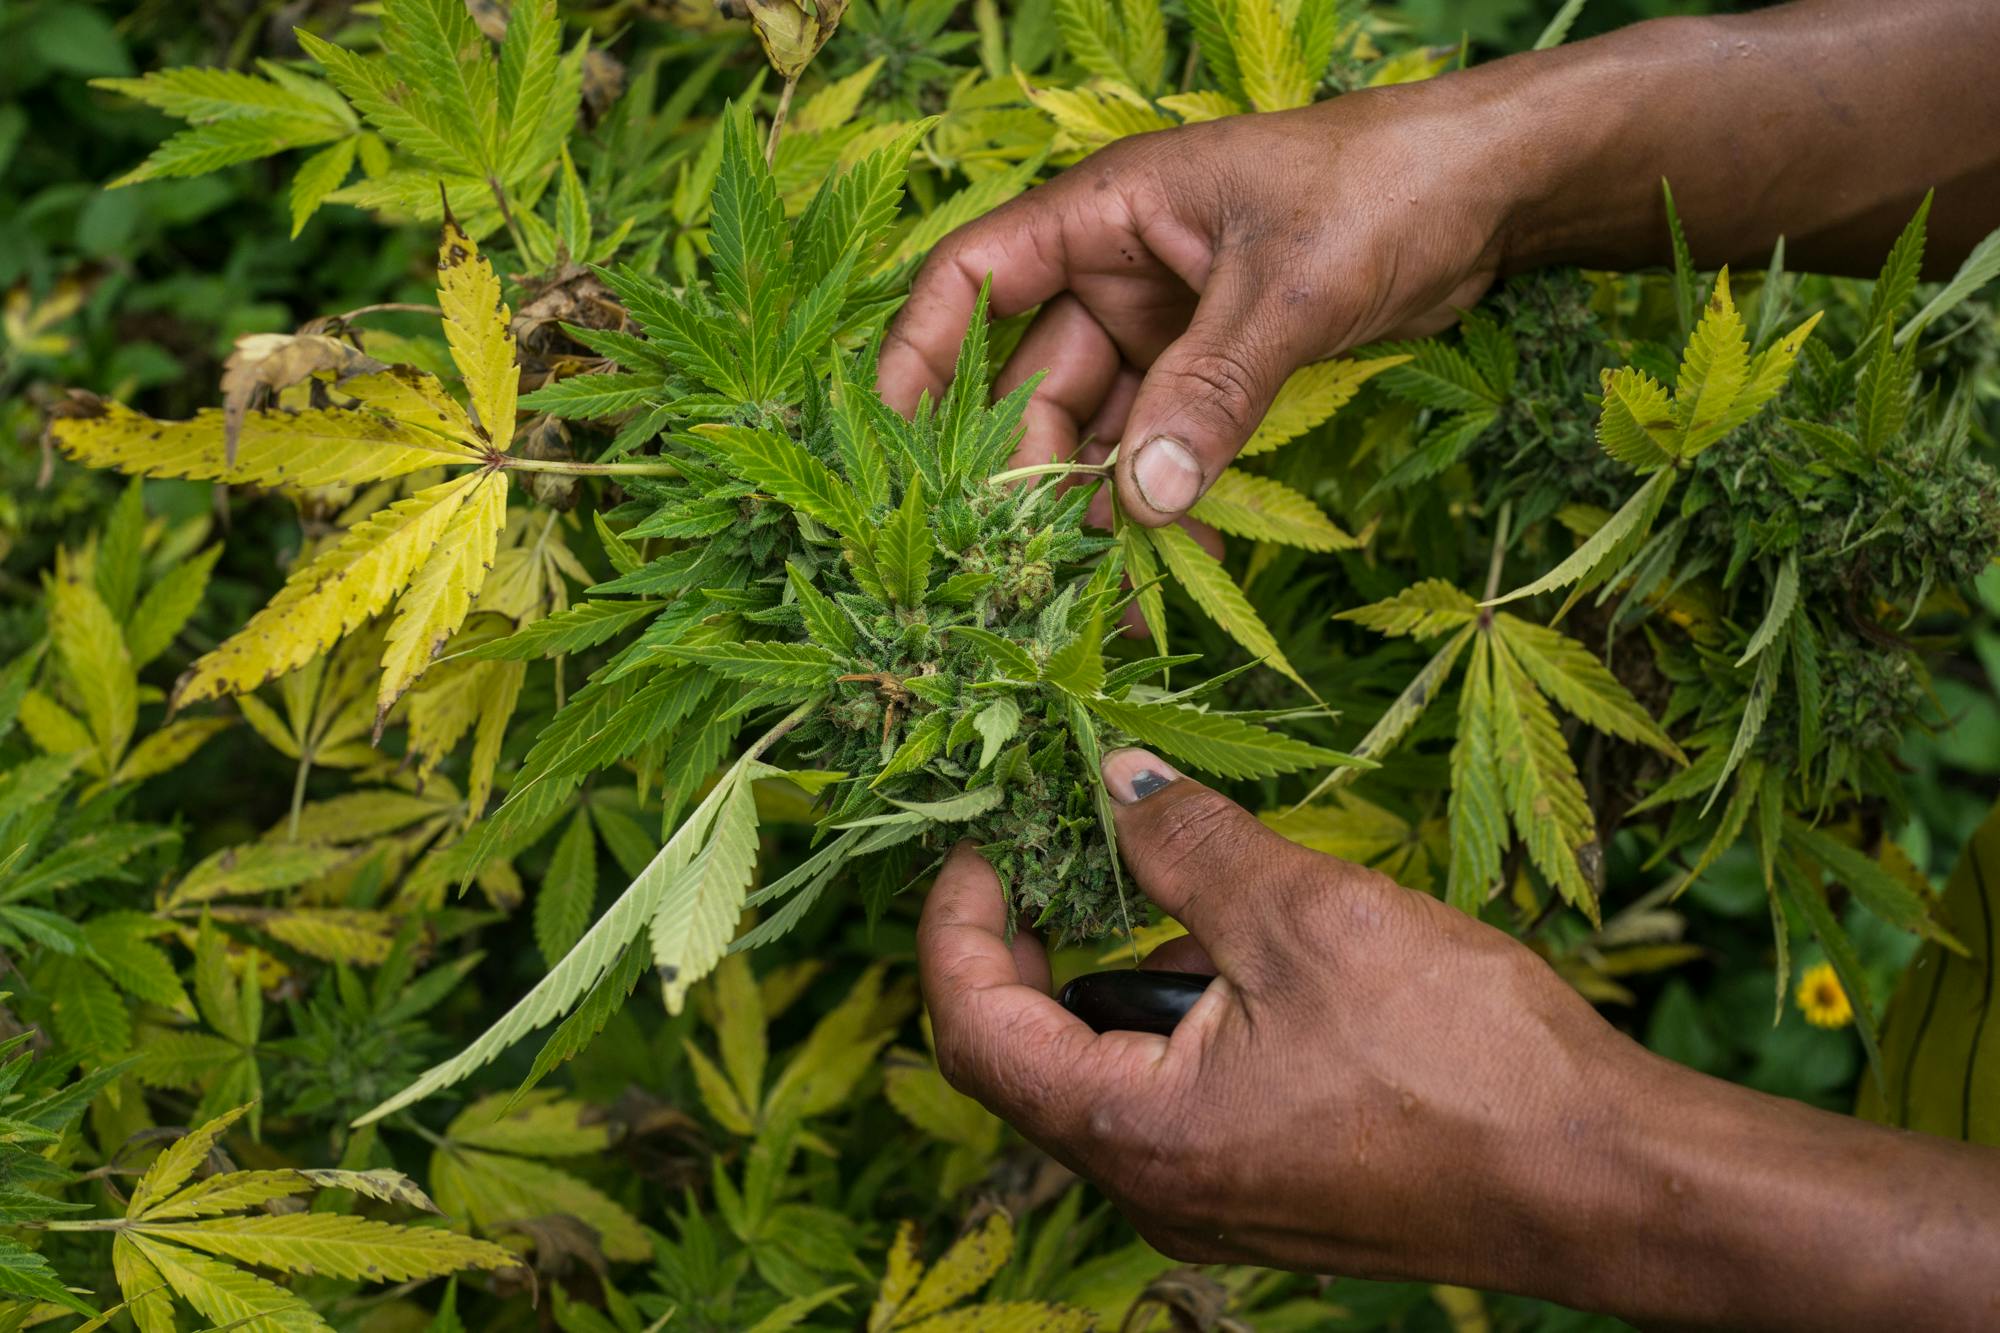 Nicolas Enriquez Marijuana   23 The FDA receives a petition to prohibit sugar alongside cannabis, LSD and heroin